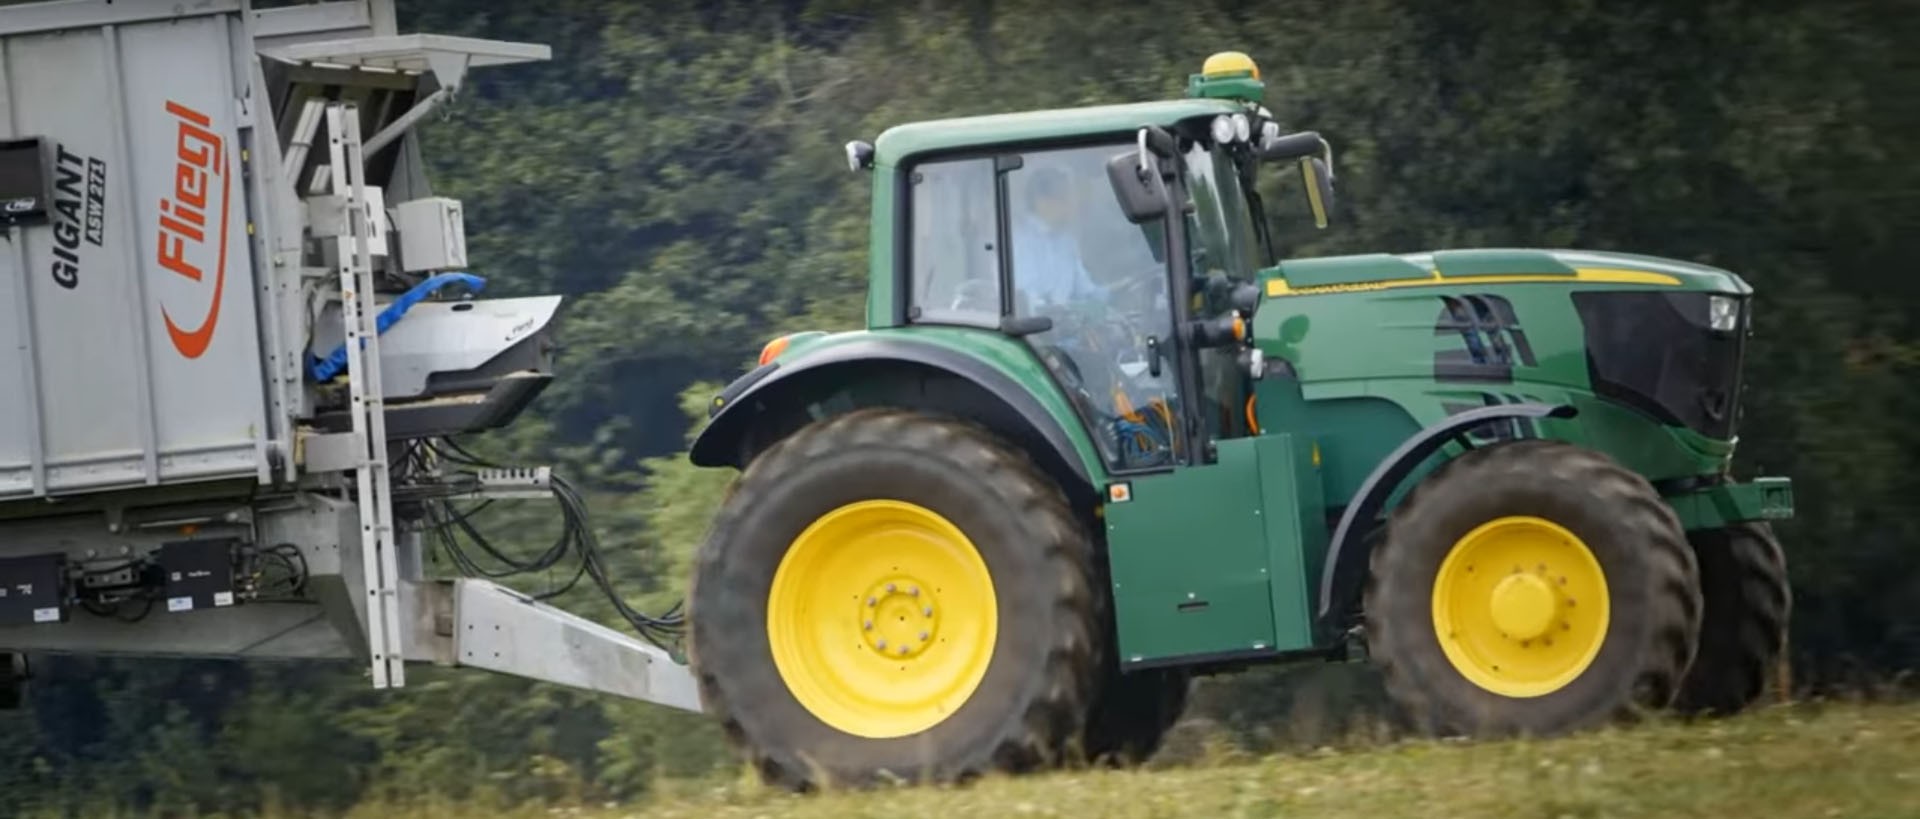 John Deere Reveals 180 HP Battery-Powered Tractor for 2016 ...